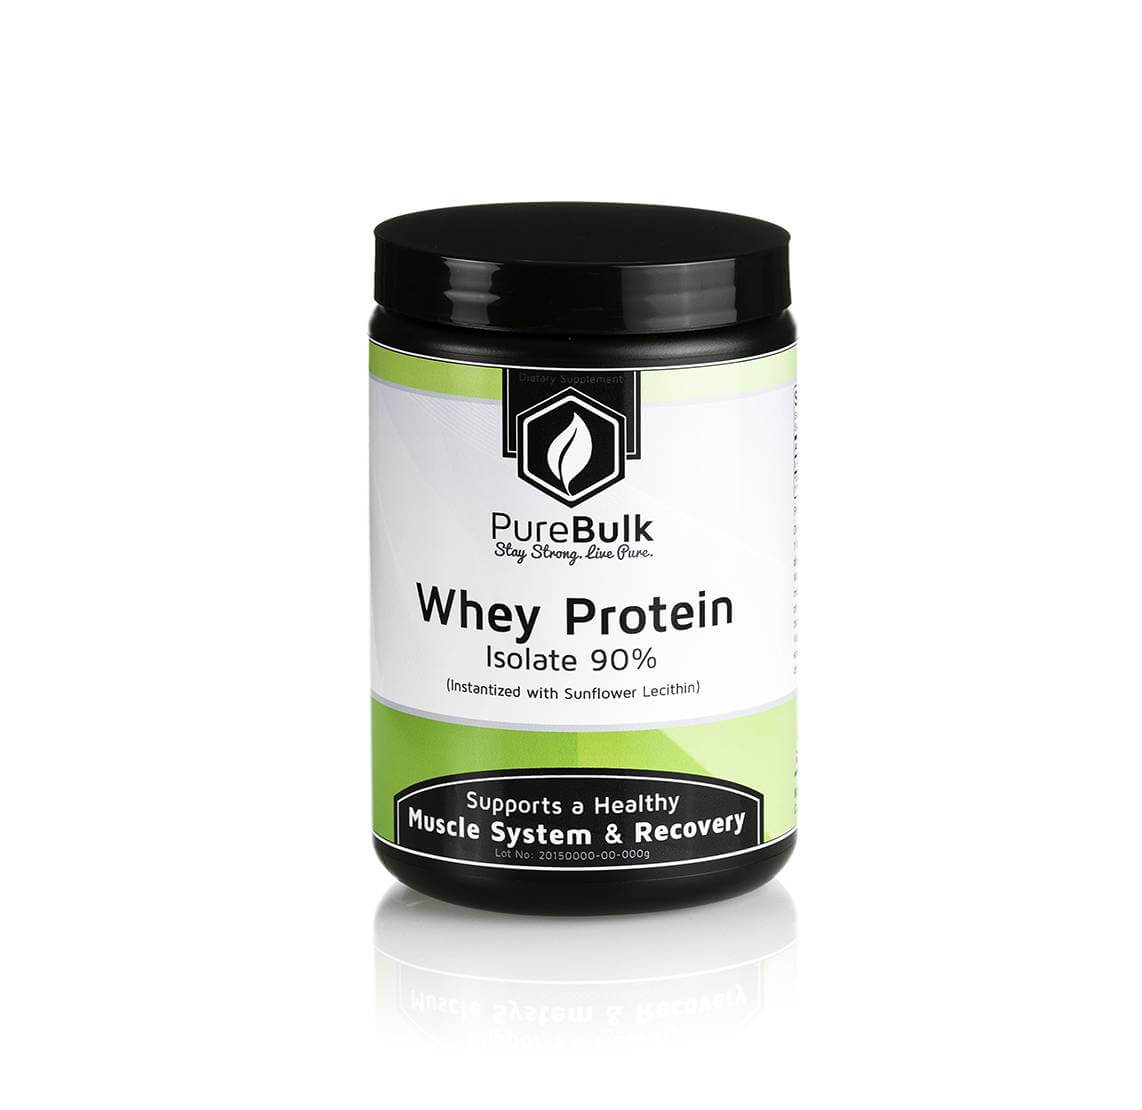 Whey Protein Isolate (90%) - Bodybuilding Supplement - PureBulk, Inc.